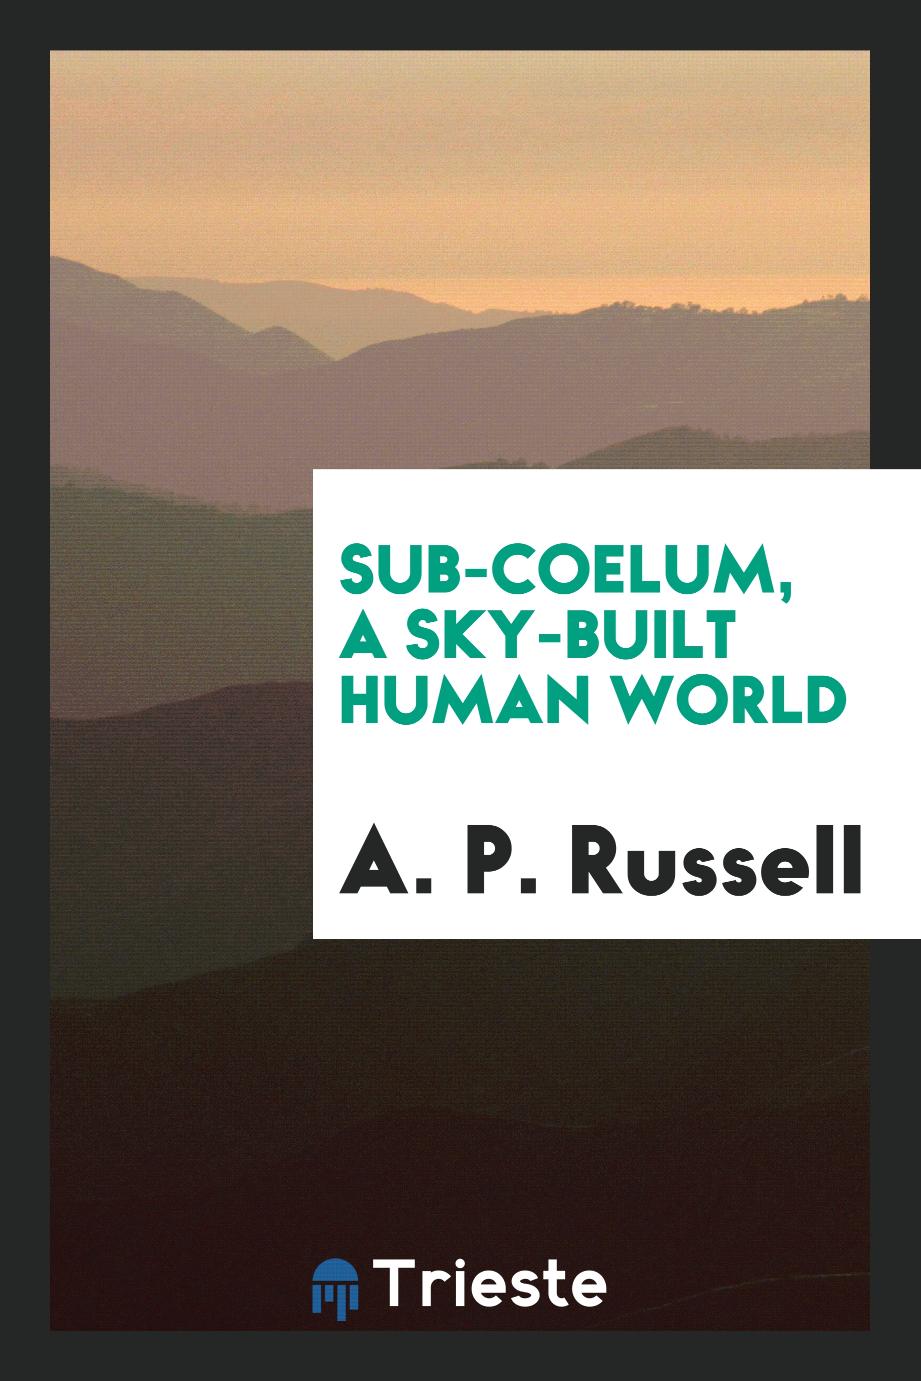 Sub-coelum, a sky-built human world